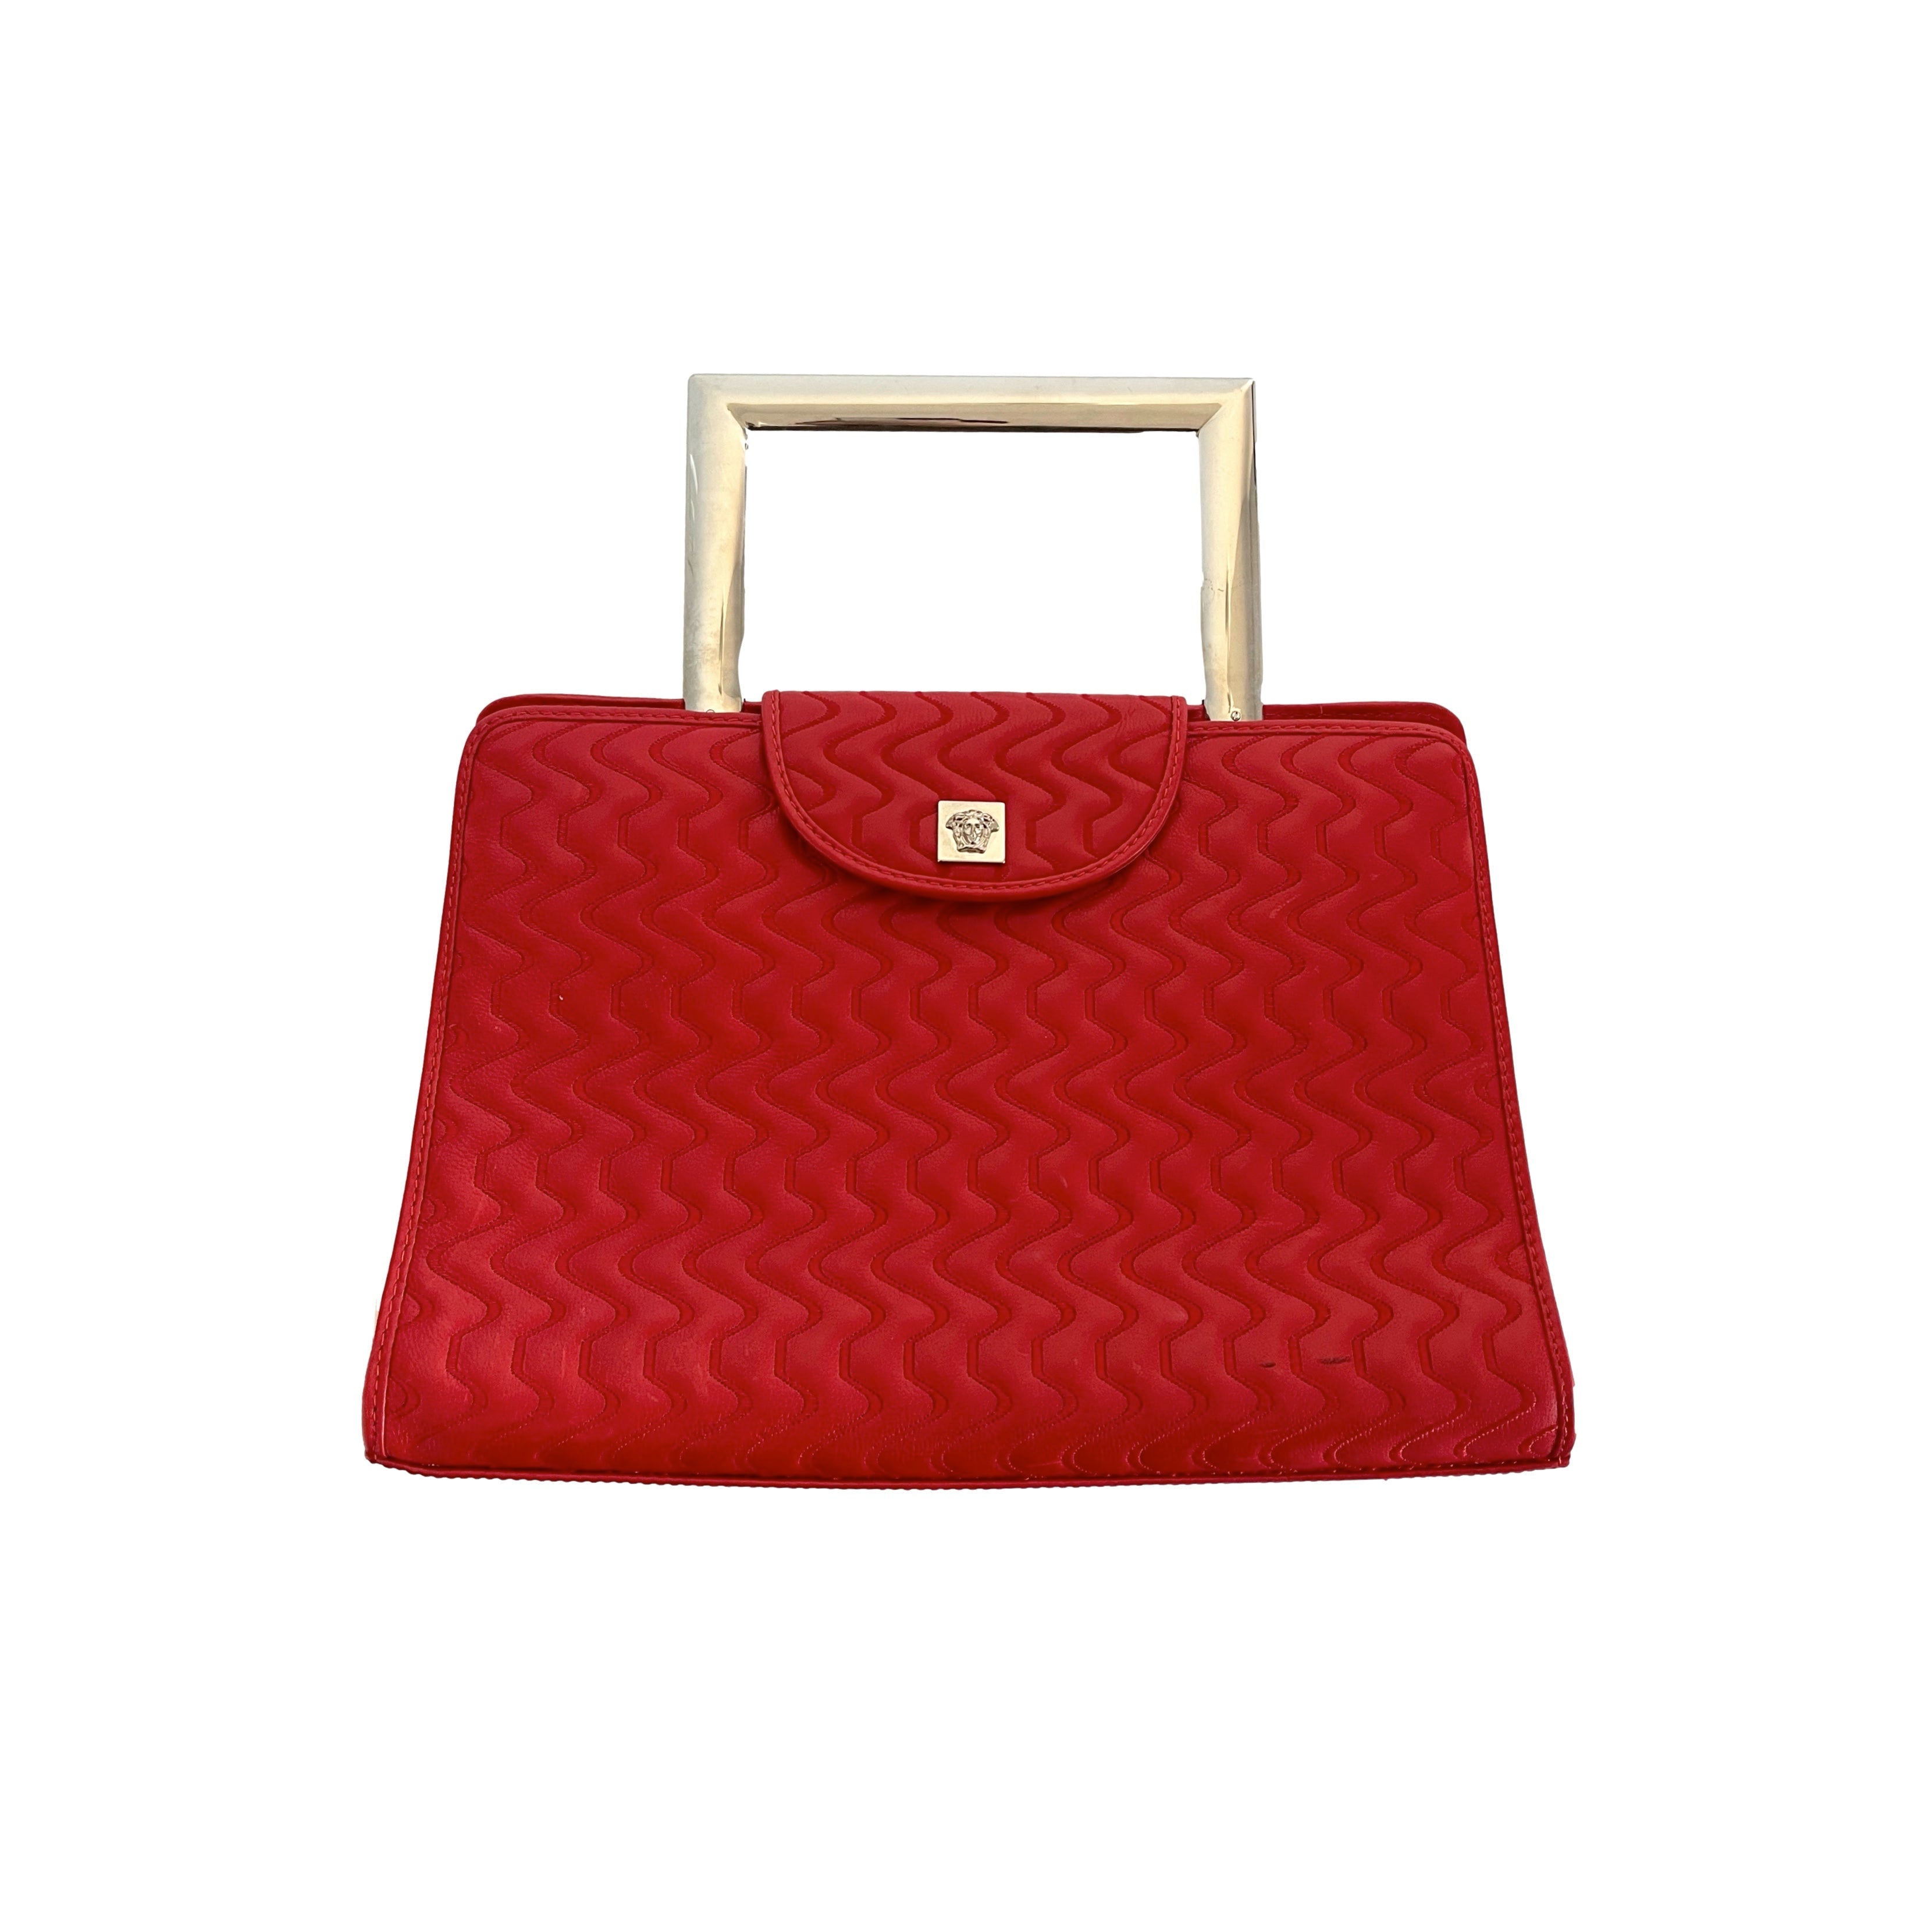 Ritupal collection Women's Stylish Handbag PU (Red) – Ritupal Collection